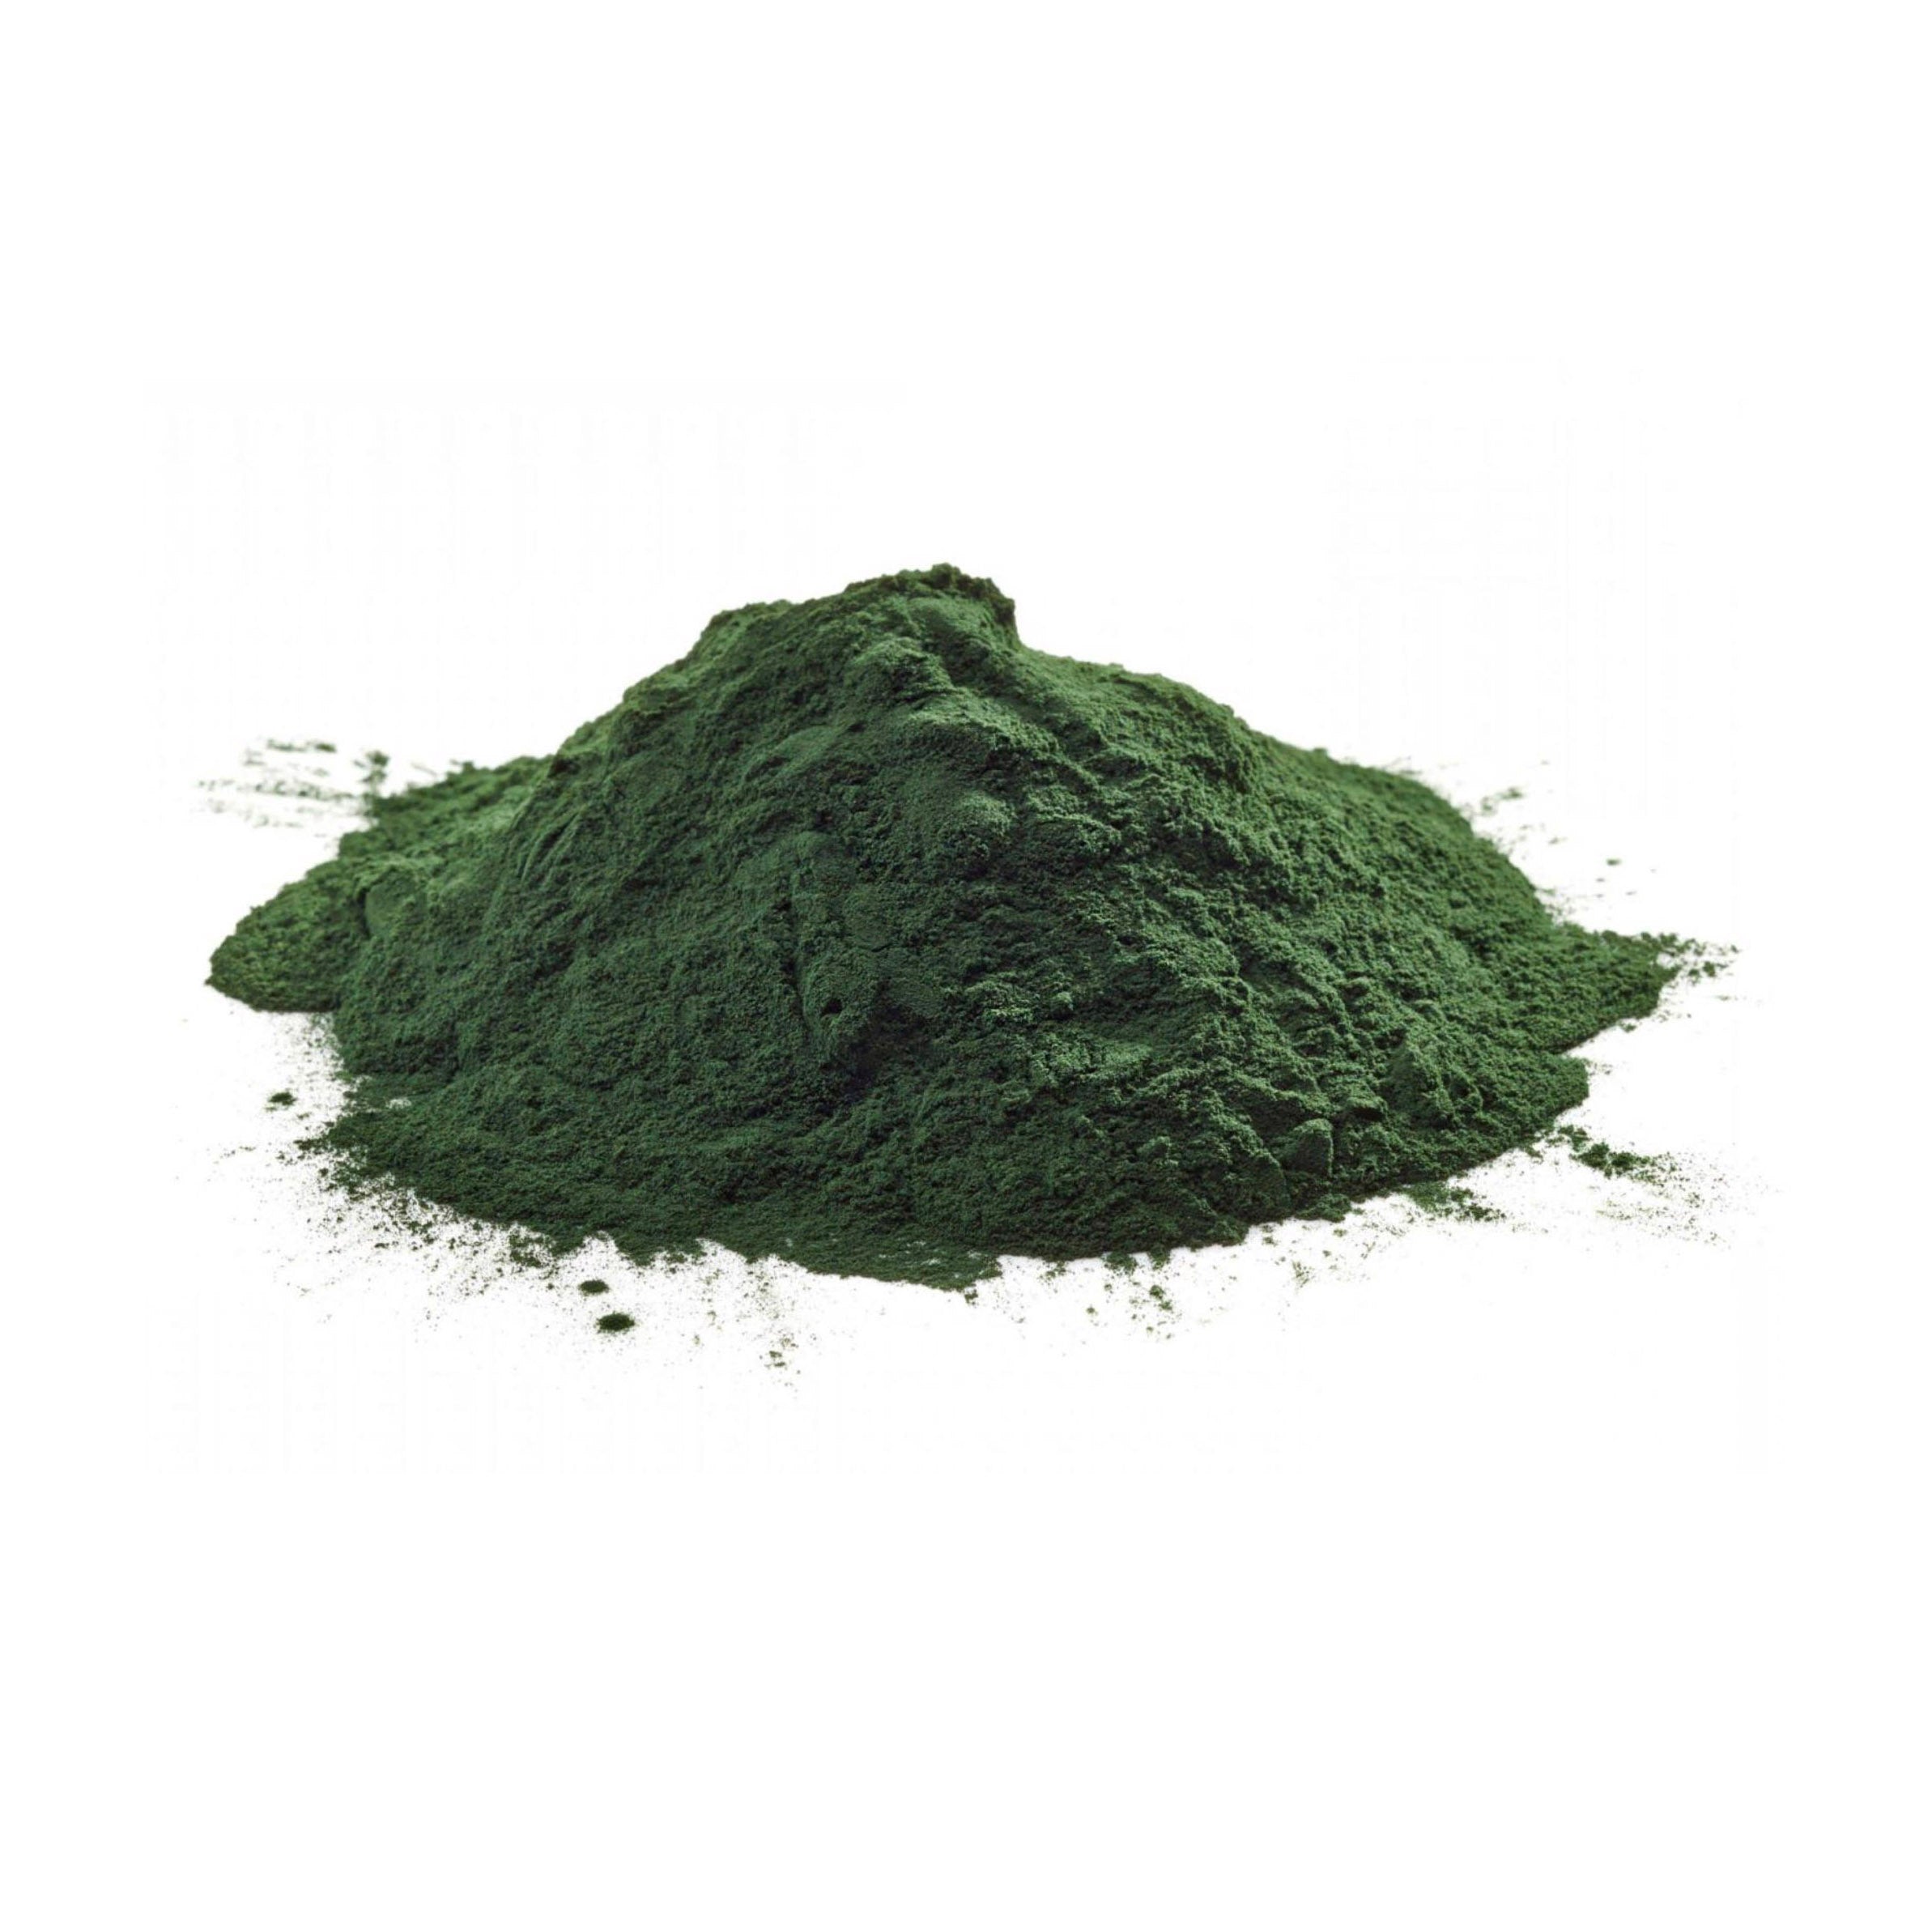 GUSTA SUPPLIES Organic Spirulina, Blue-Green Algae Powder, 100g